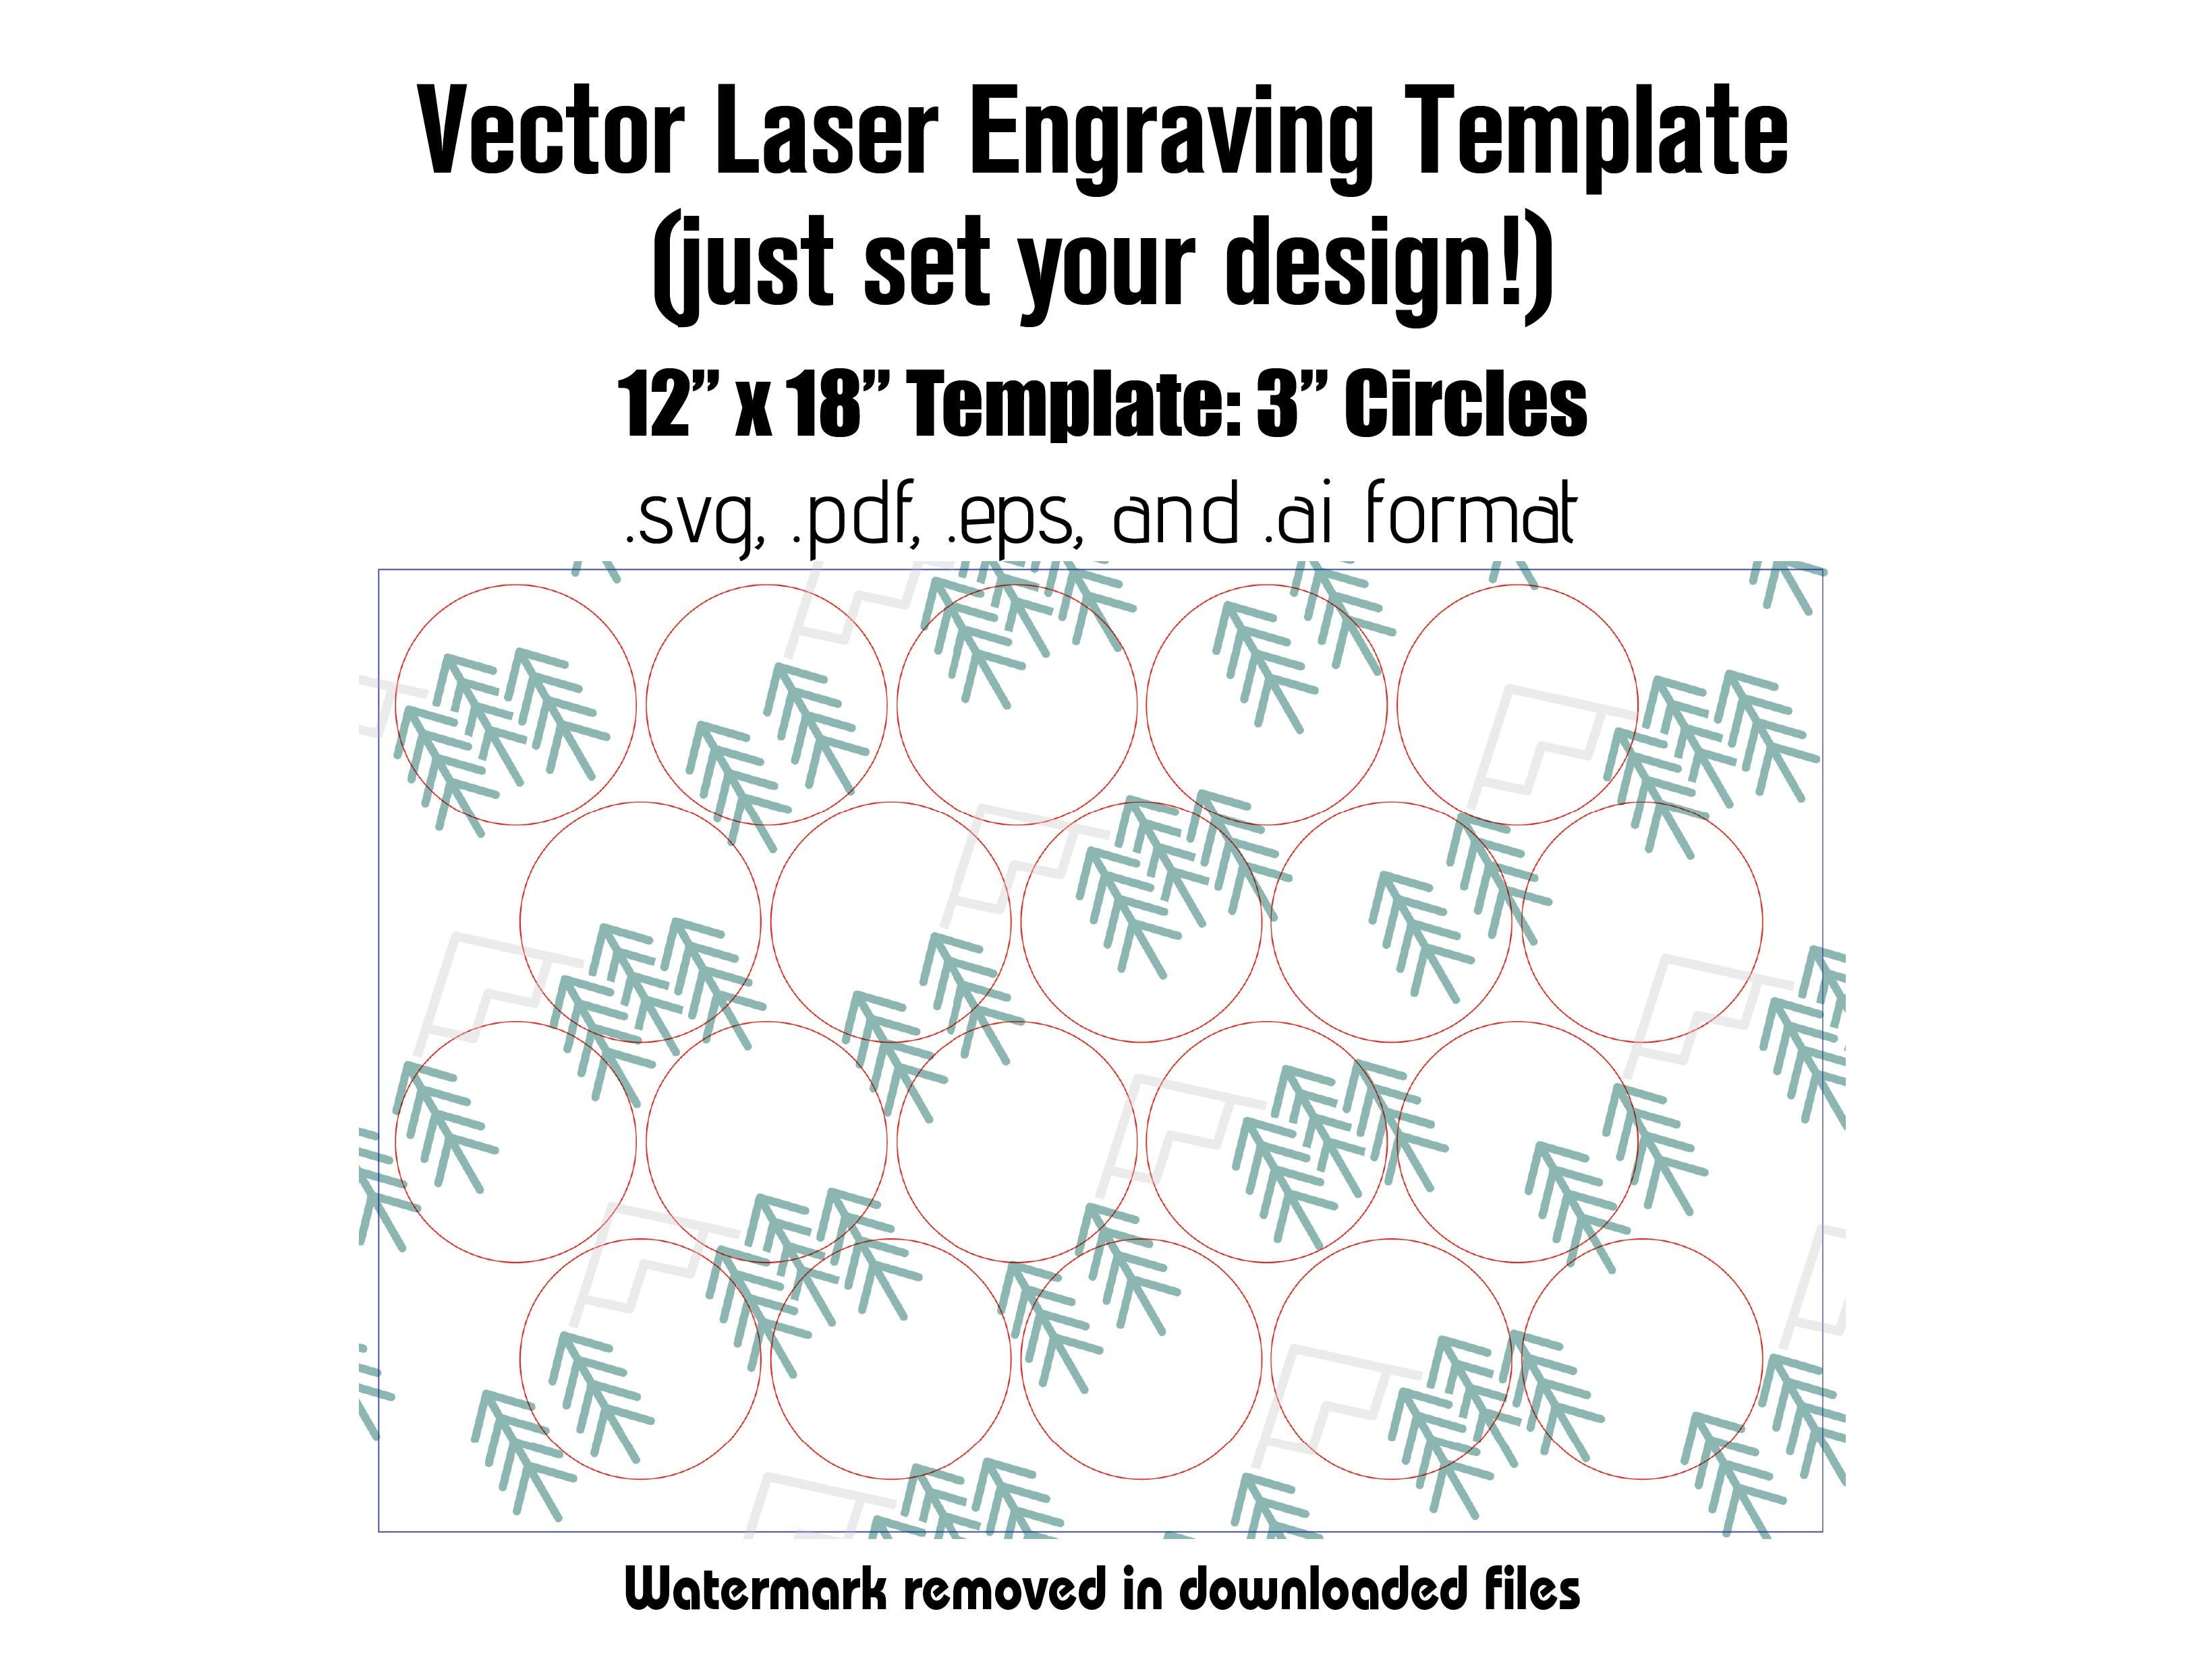 Digital Laser Cutting Template: 3" Circles - 12" x 18" Sheet Size Digital Laser Engraving Files Craftworks NW 